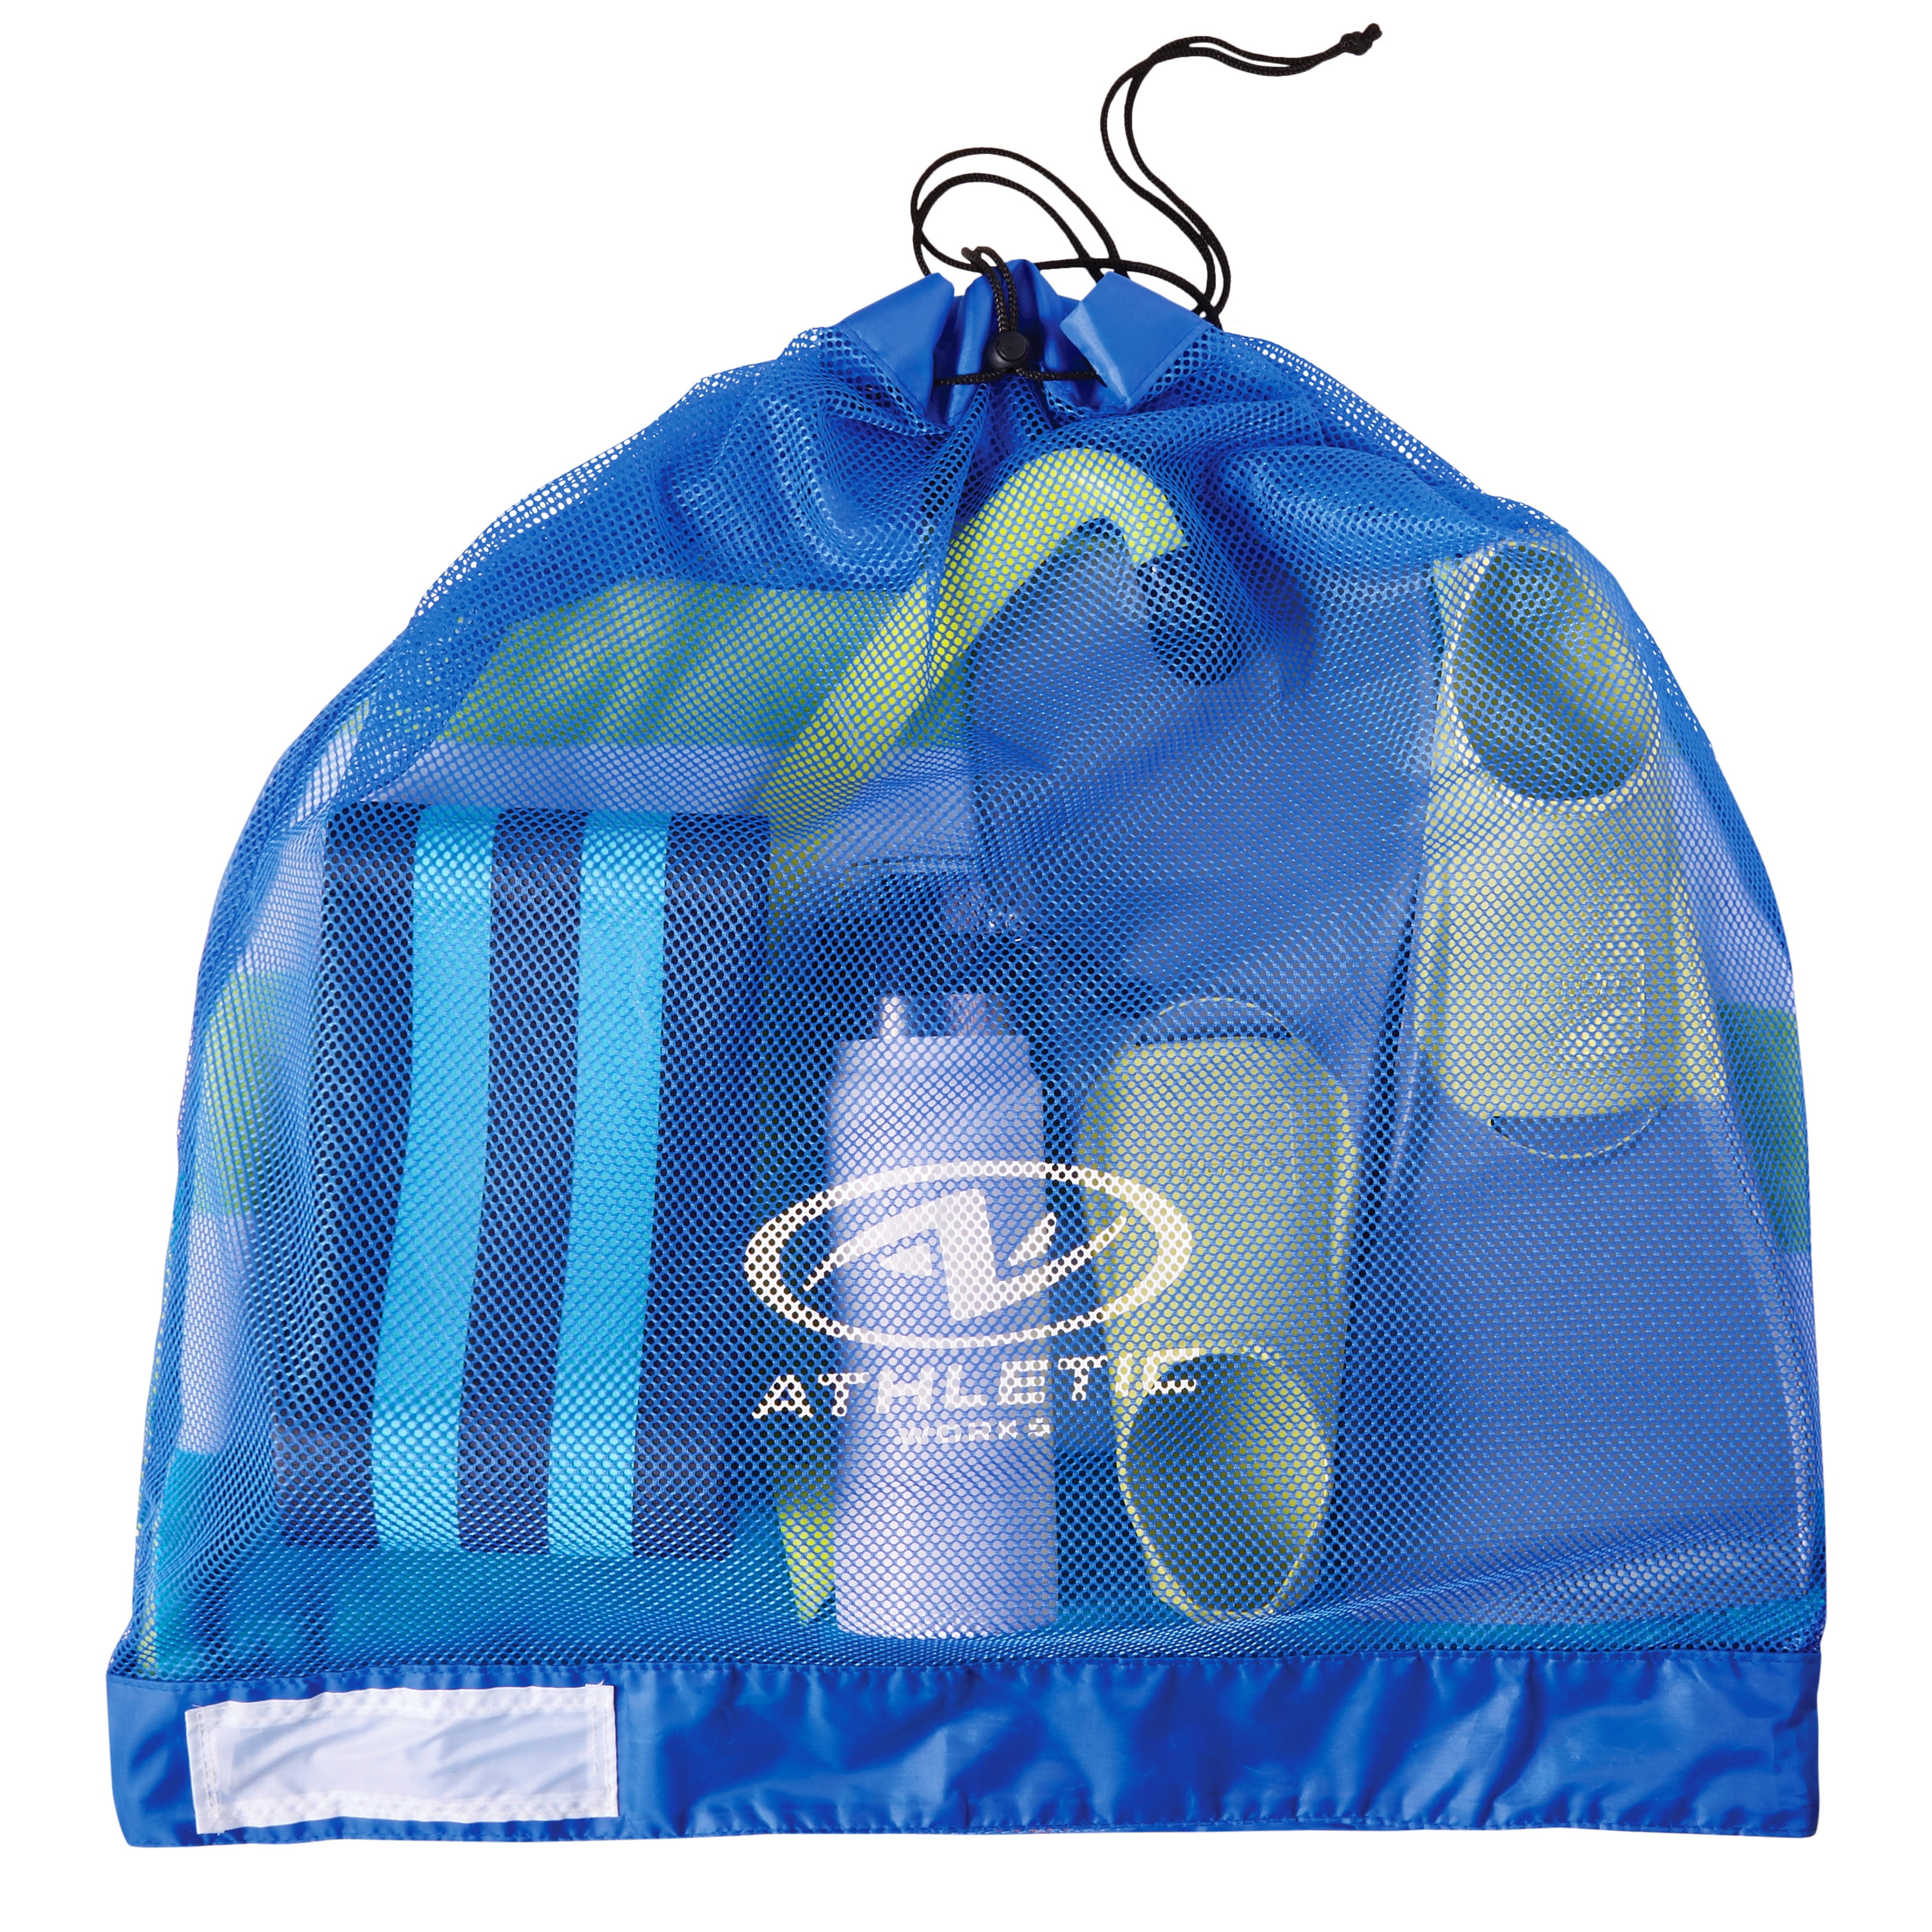 Speedo Equipment Mesh Wet Kit Bag Swimming,